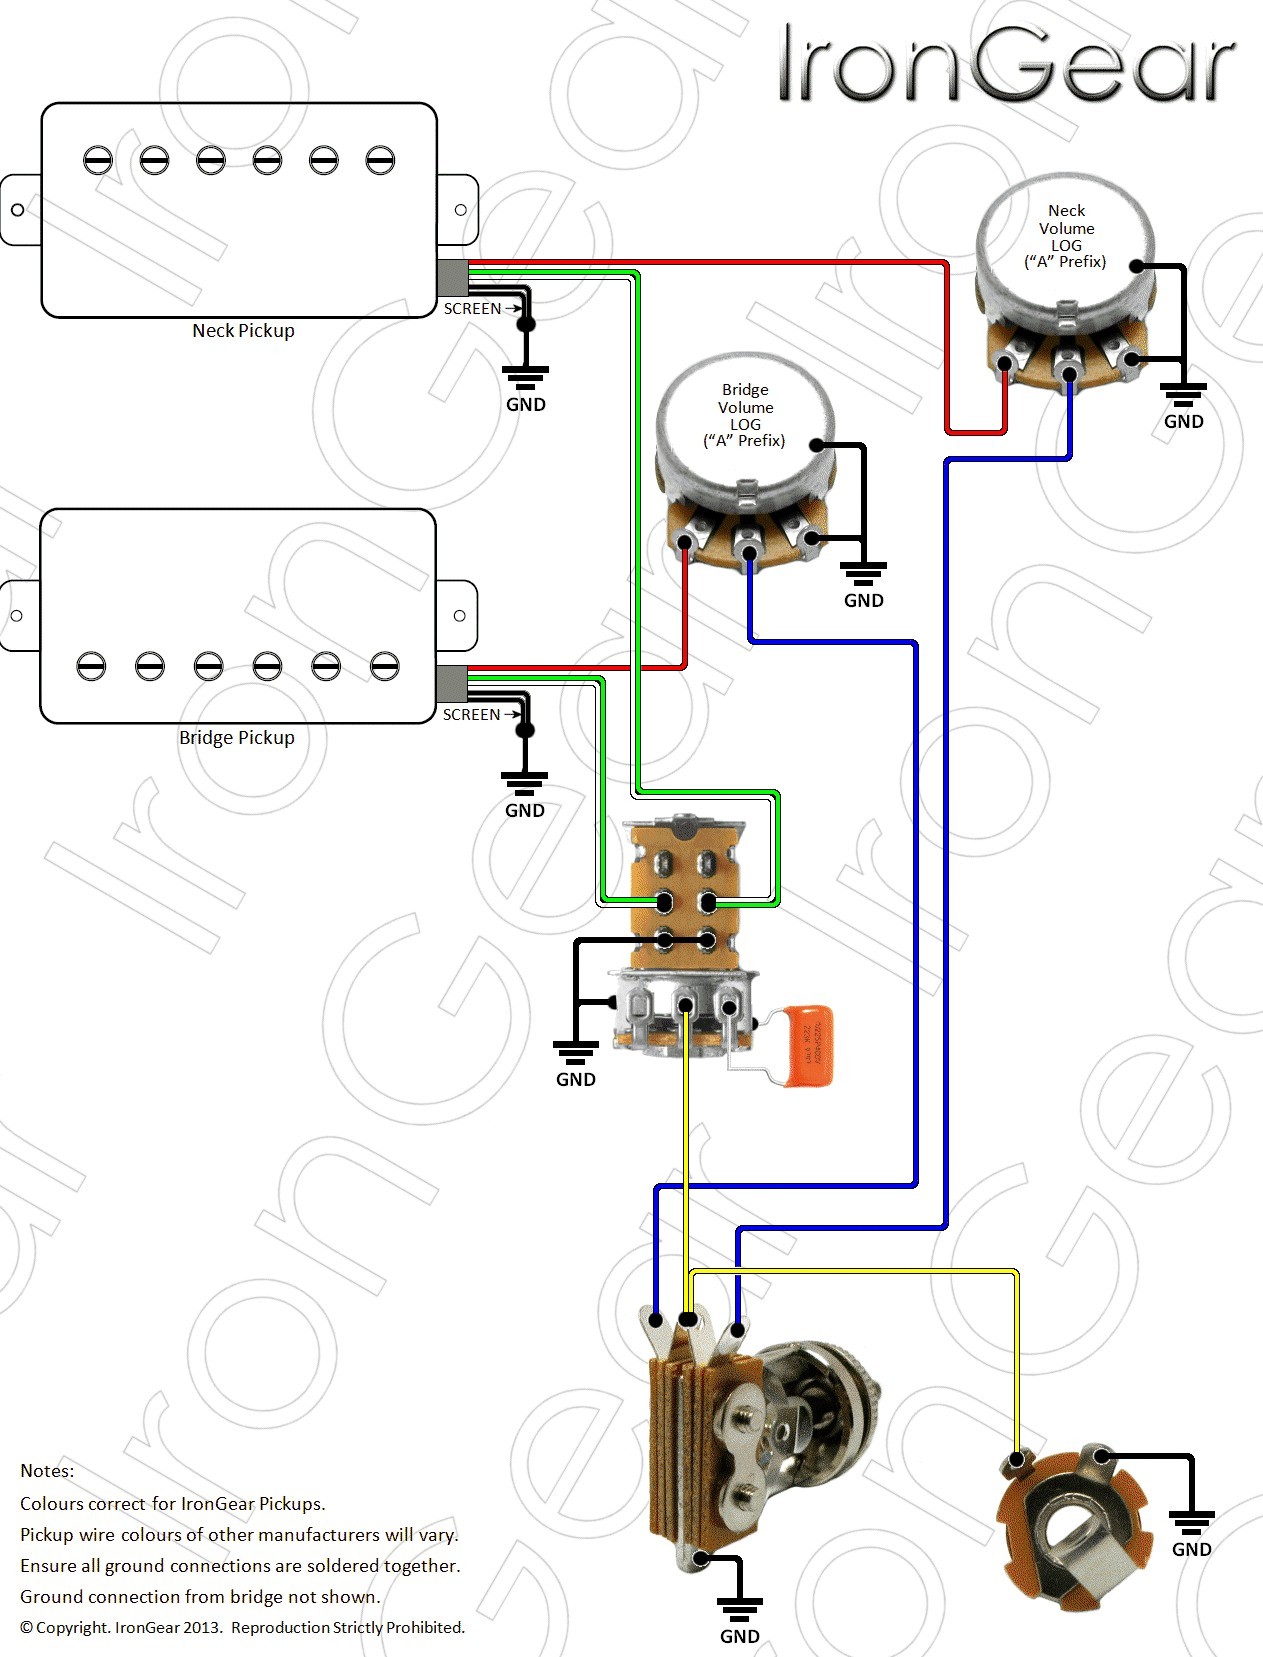 Active Guitar Wiring Diagram New Emg Wiring Diagram Copy Emg Wiring Diagram 81 85 2 Volume